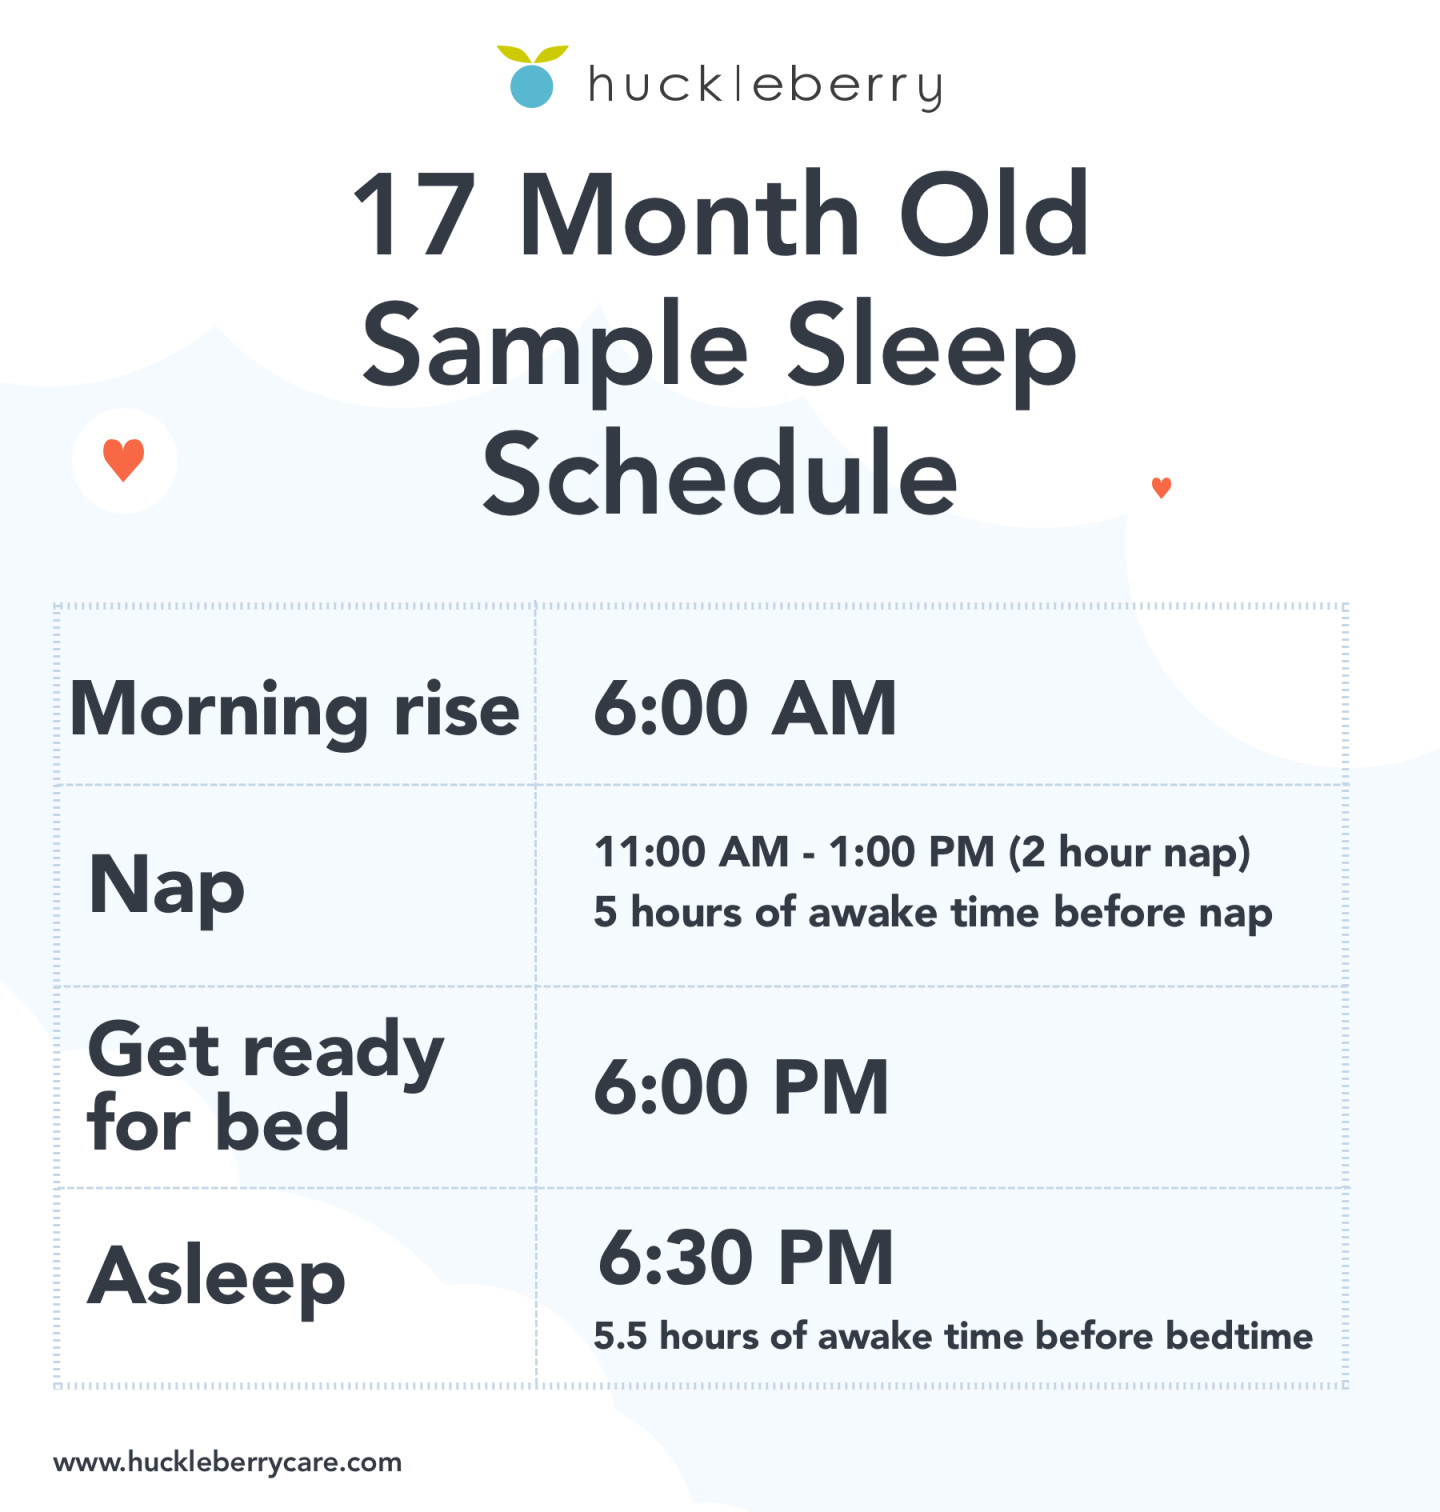 Sample 17 month old sleep schedule